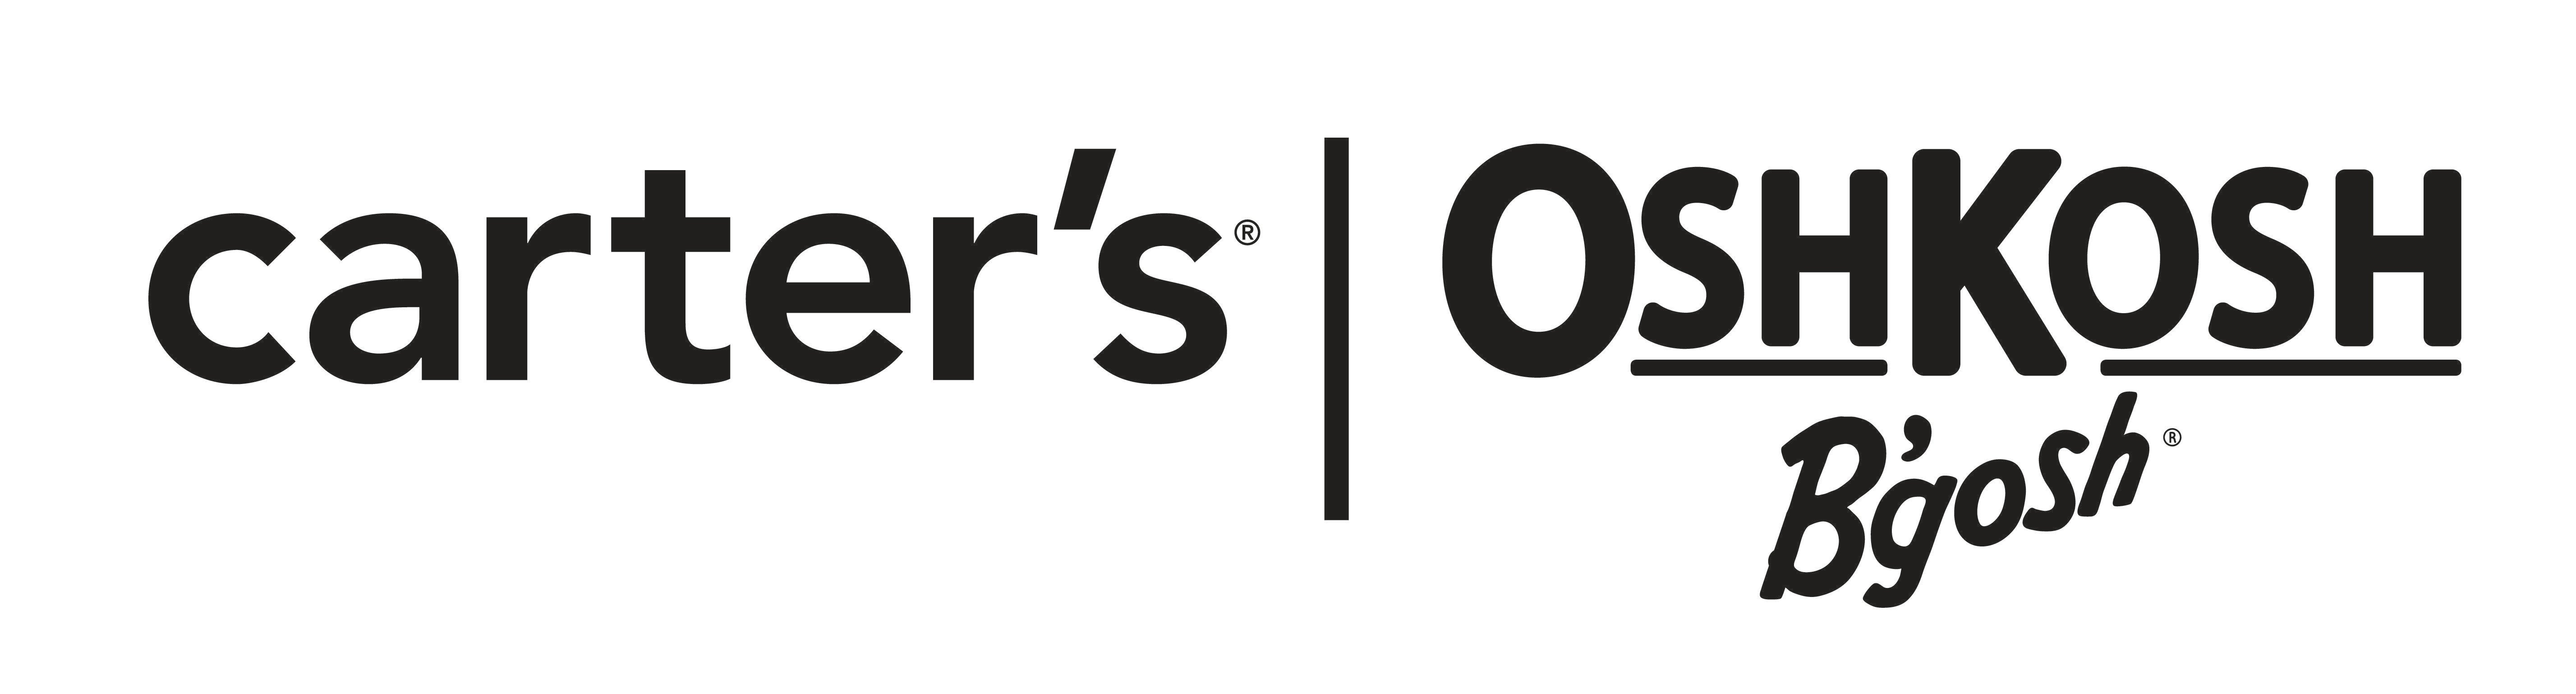 Carter's Logo - OshKosh